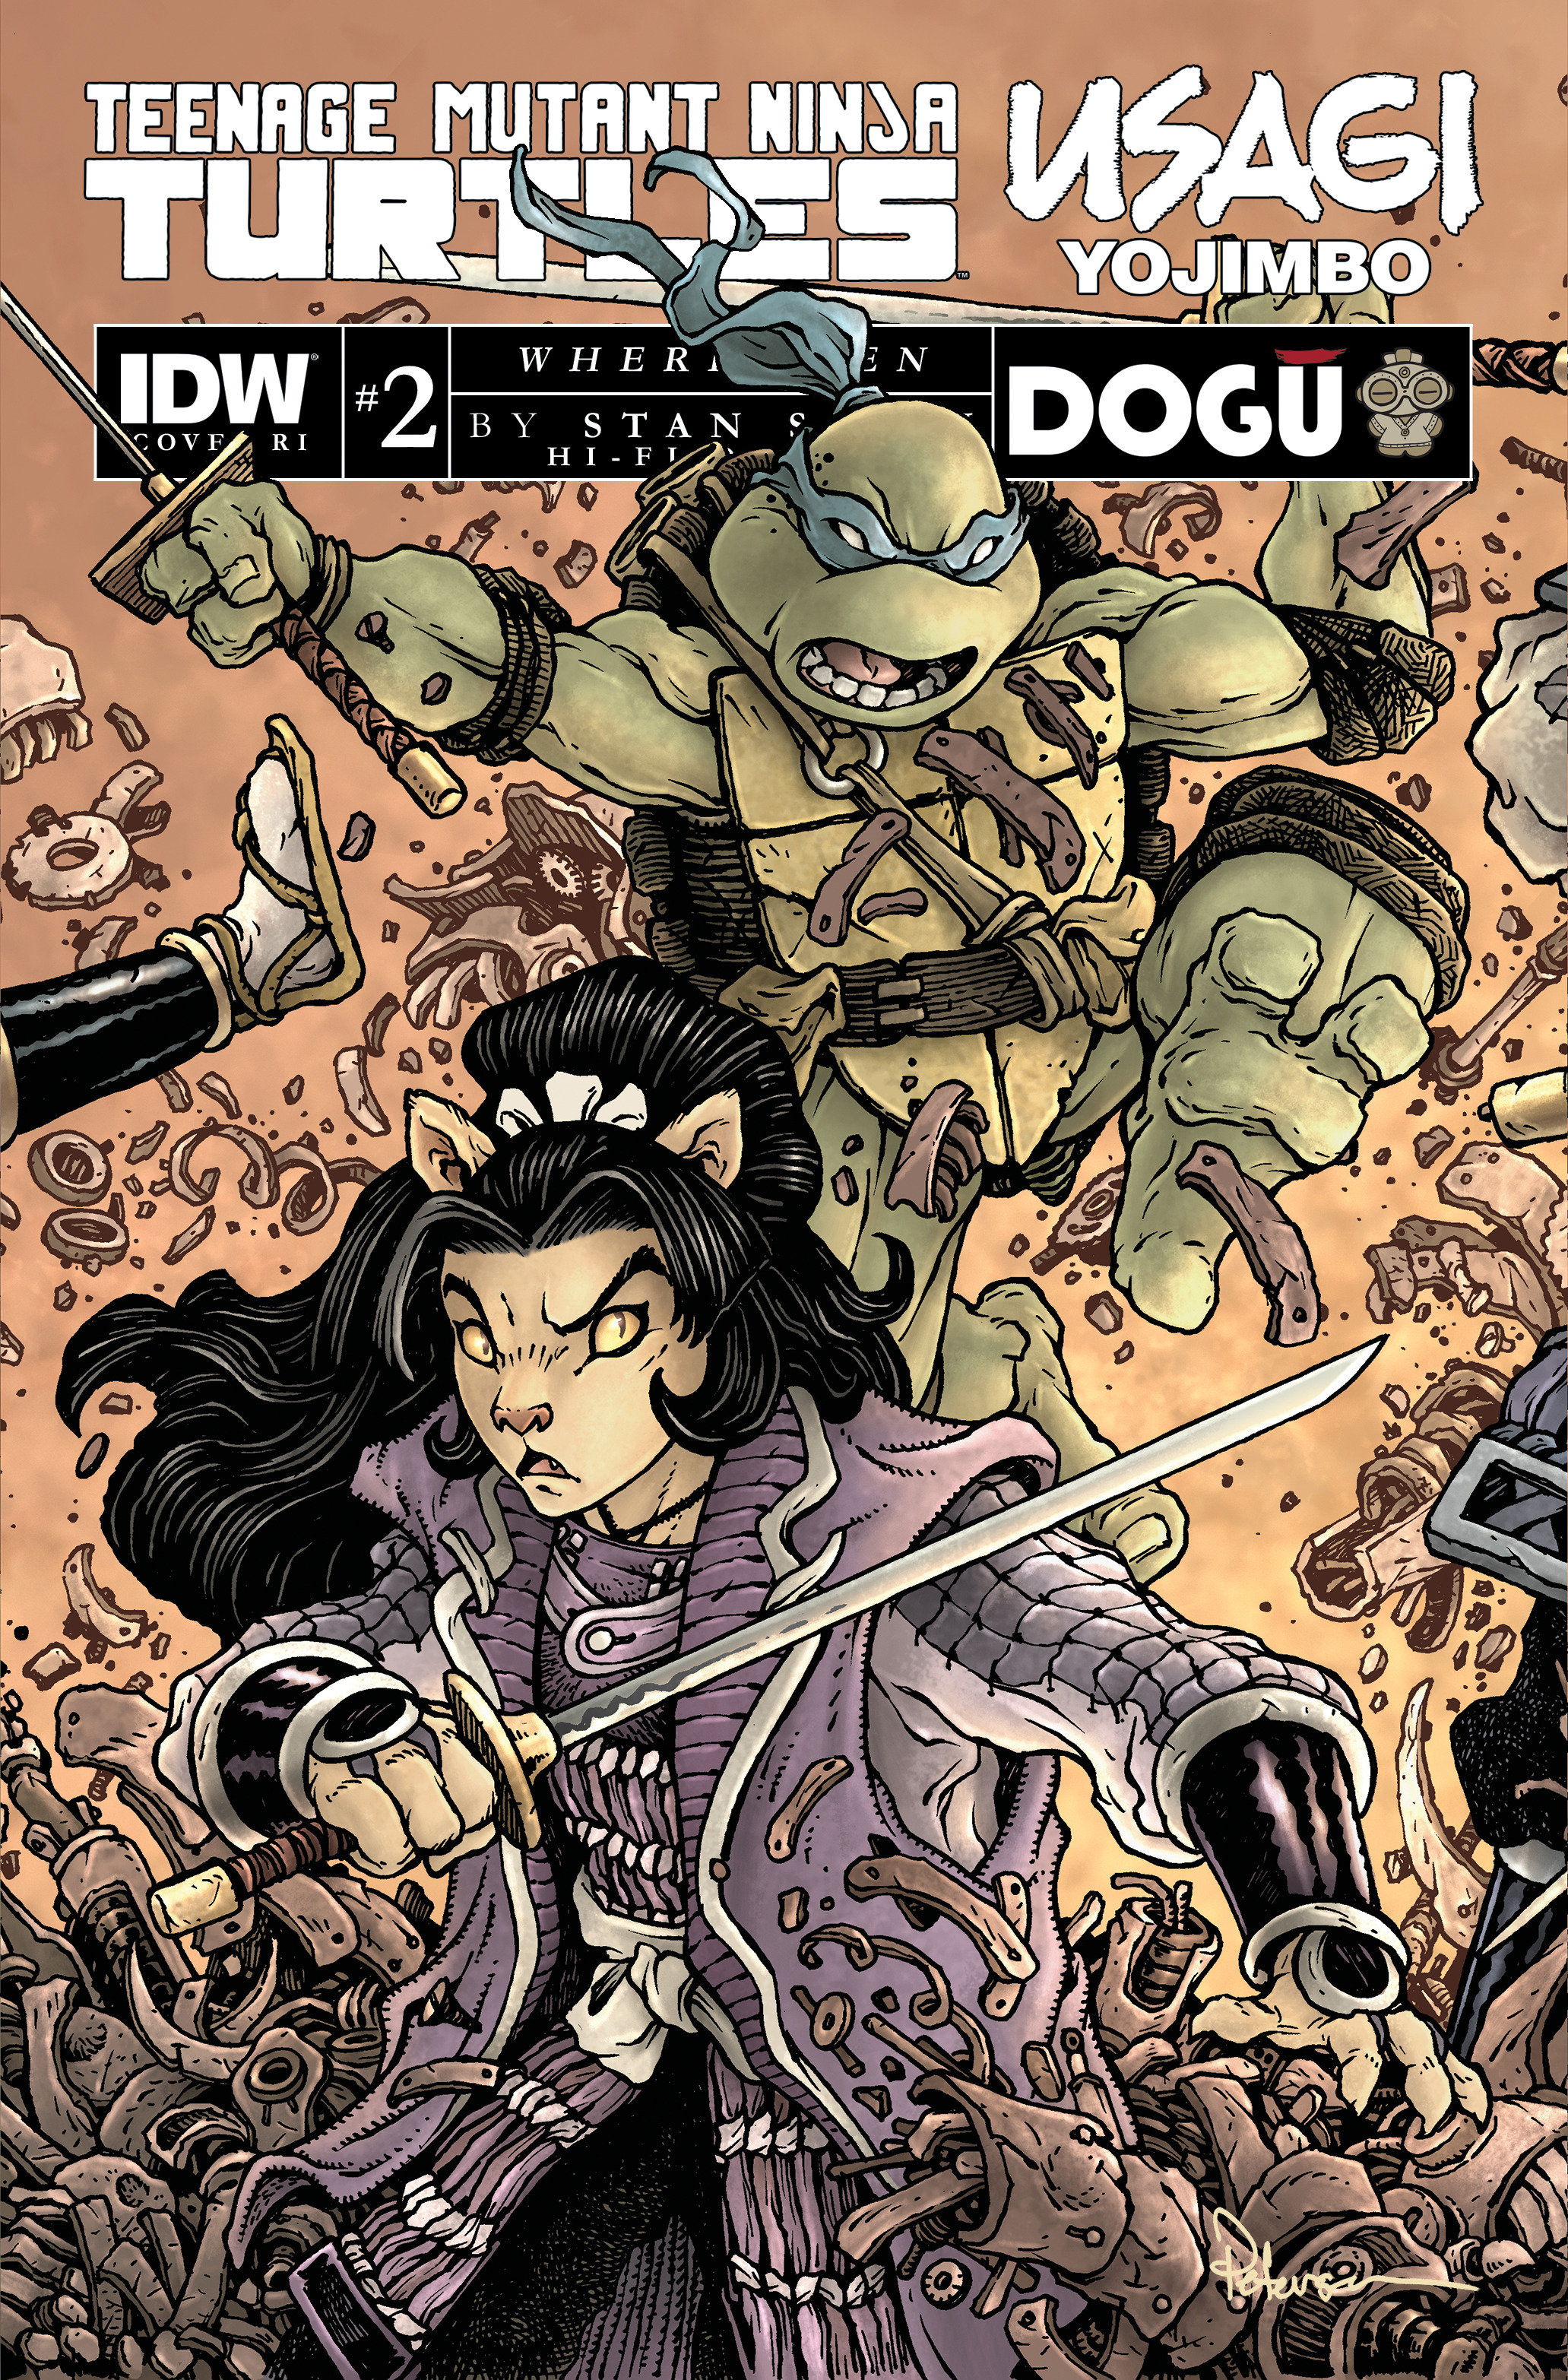 Teenage Mutant Ninja Turtles/Usagi Yojimbo WhereWhen #2 Cover E 1 for 50 Incentive Petersen